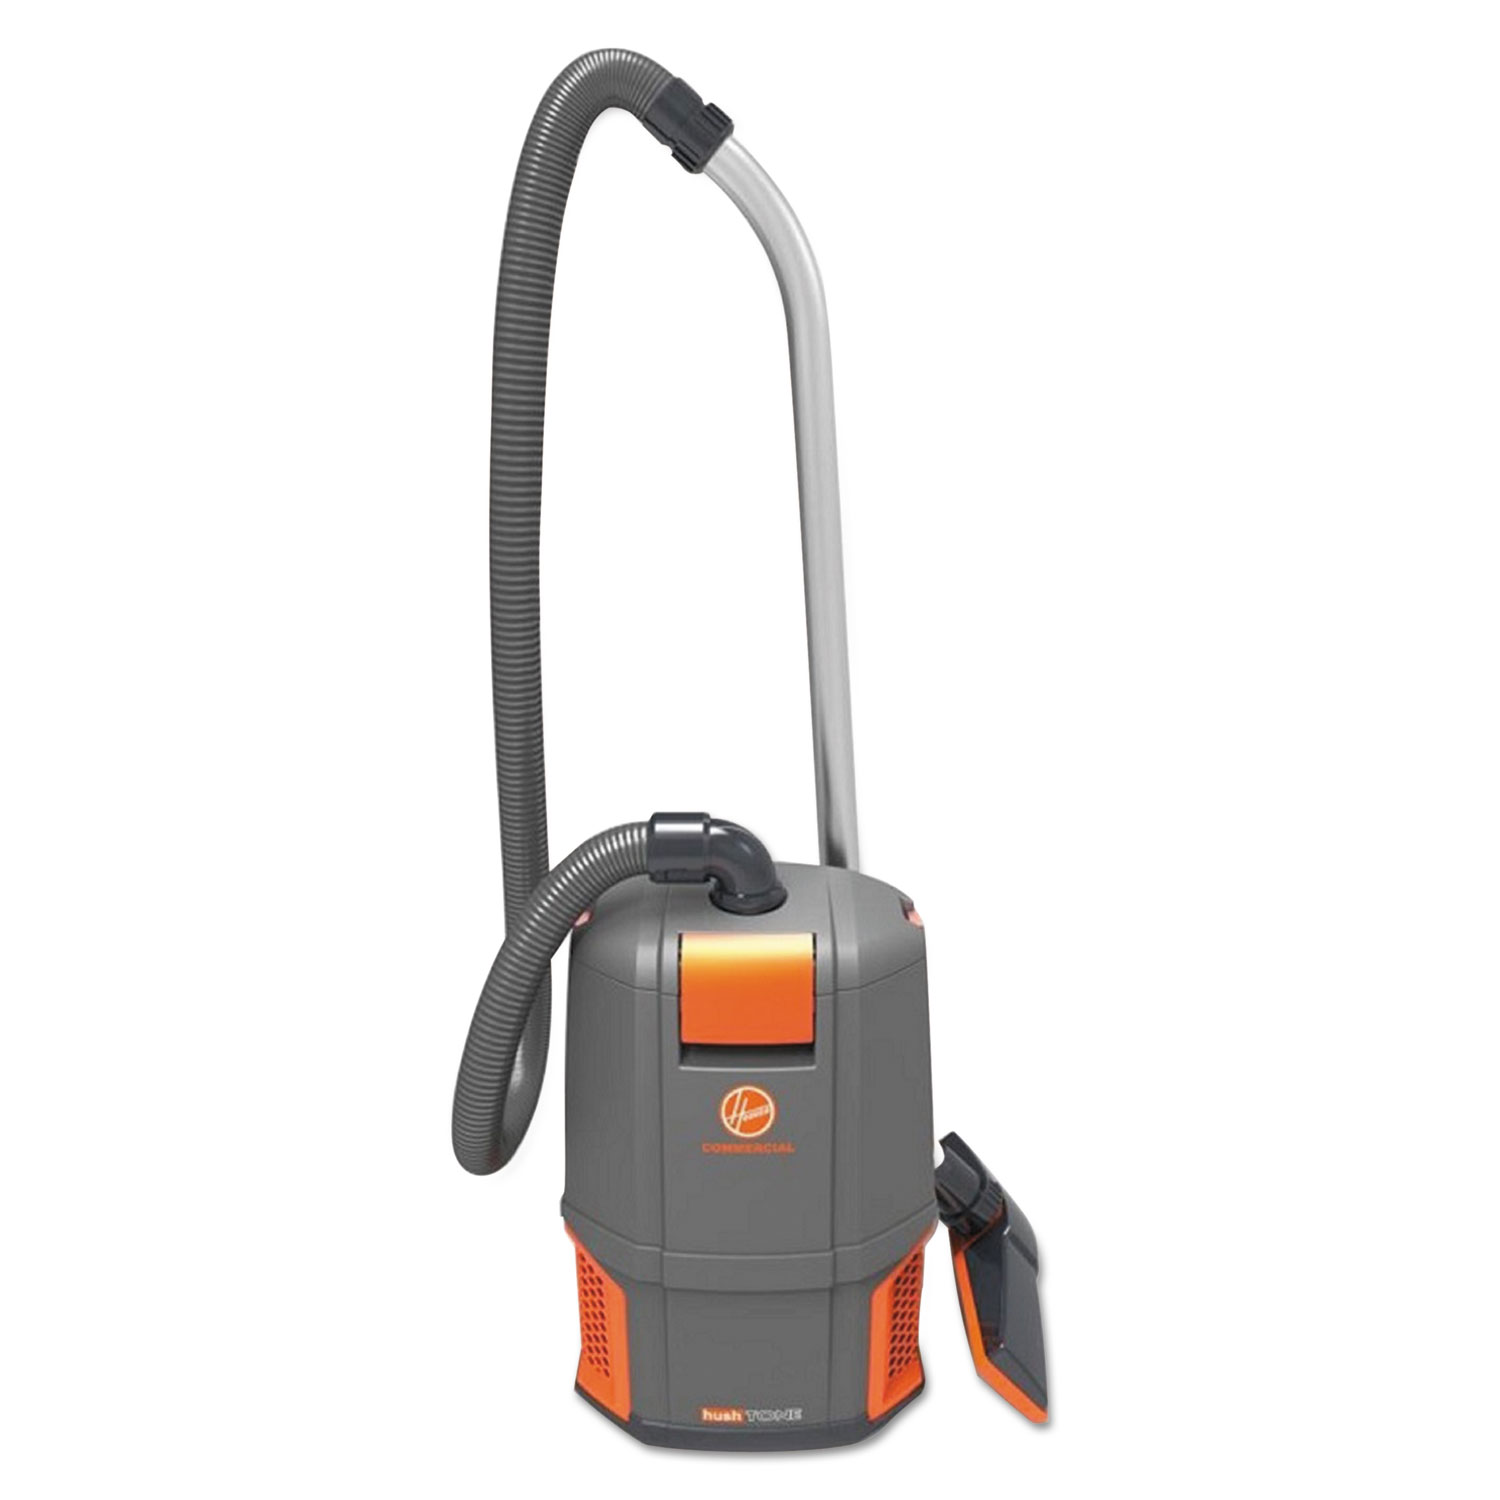  Hoover Commercial CH34006 HushTone Backpack Vacuum Cleaner, 11.7 lb., Gray/Orange (HVRCH34006) 